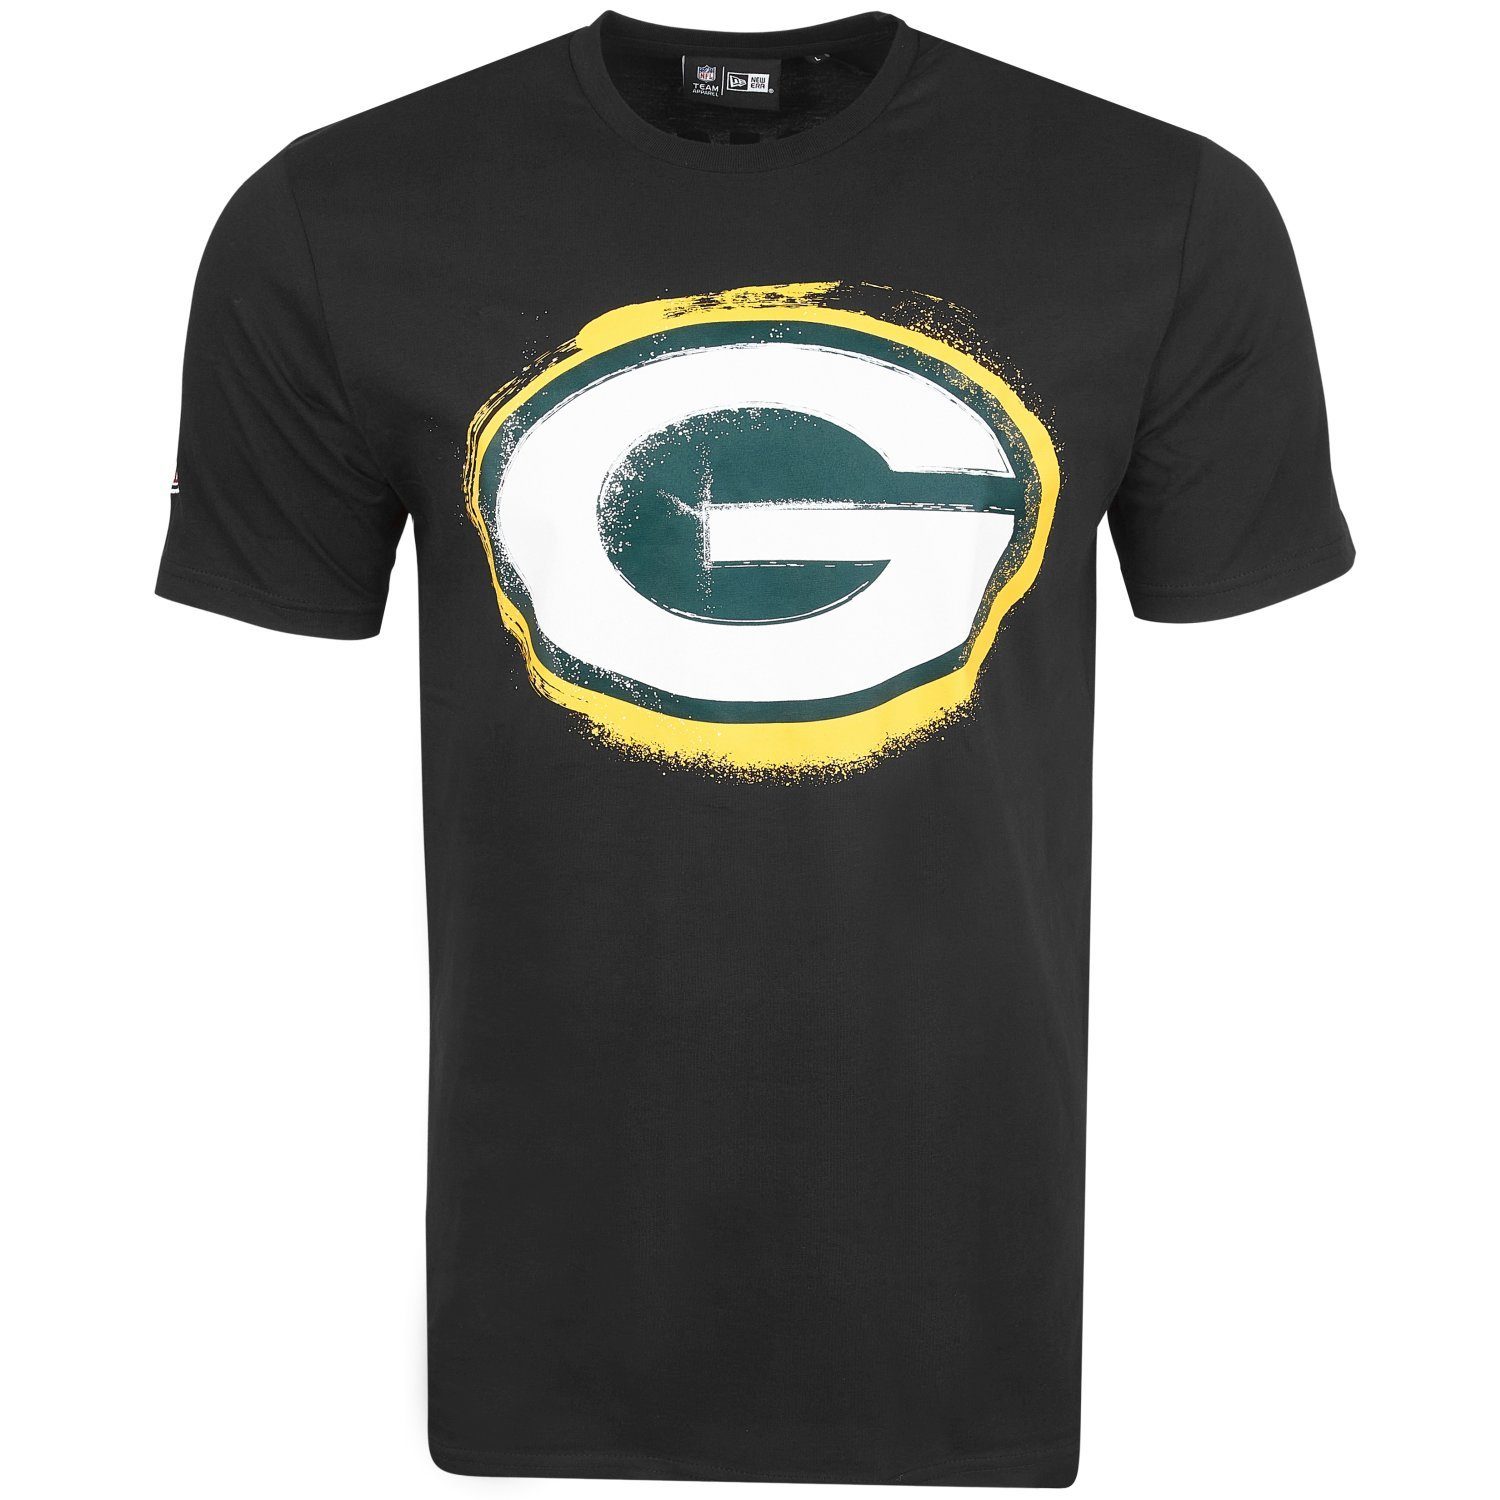 New Era Print-Shirt NFL SPRAY Bucs Chiefs Seahawks Patriots Packer Green Bay Packers